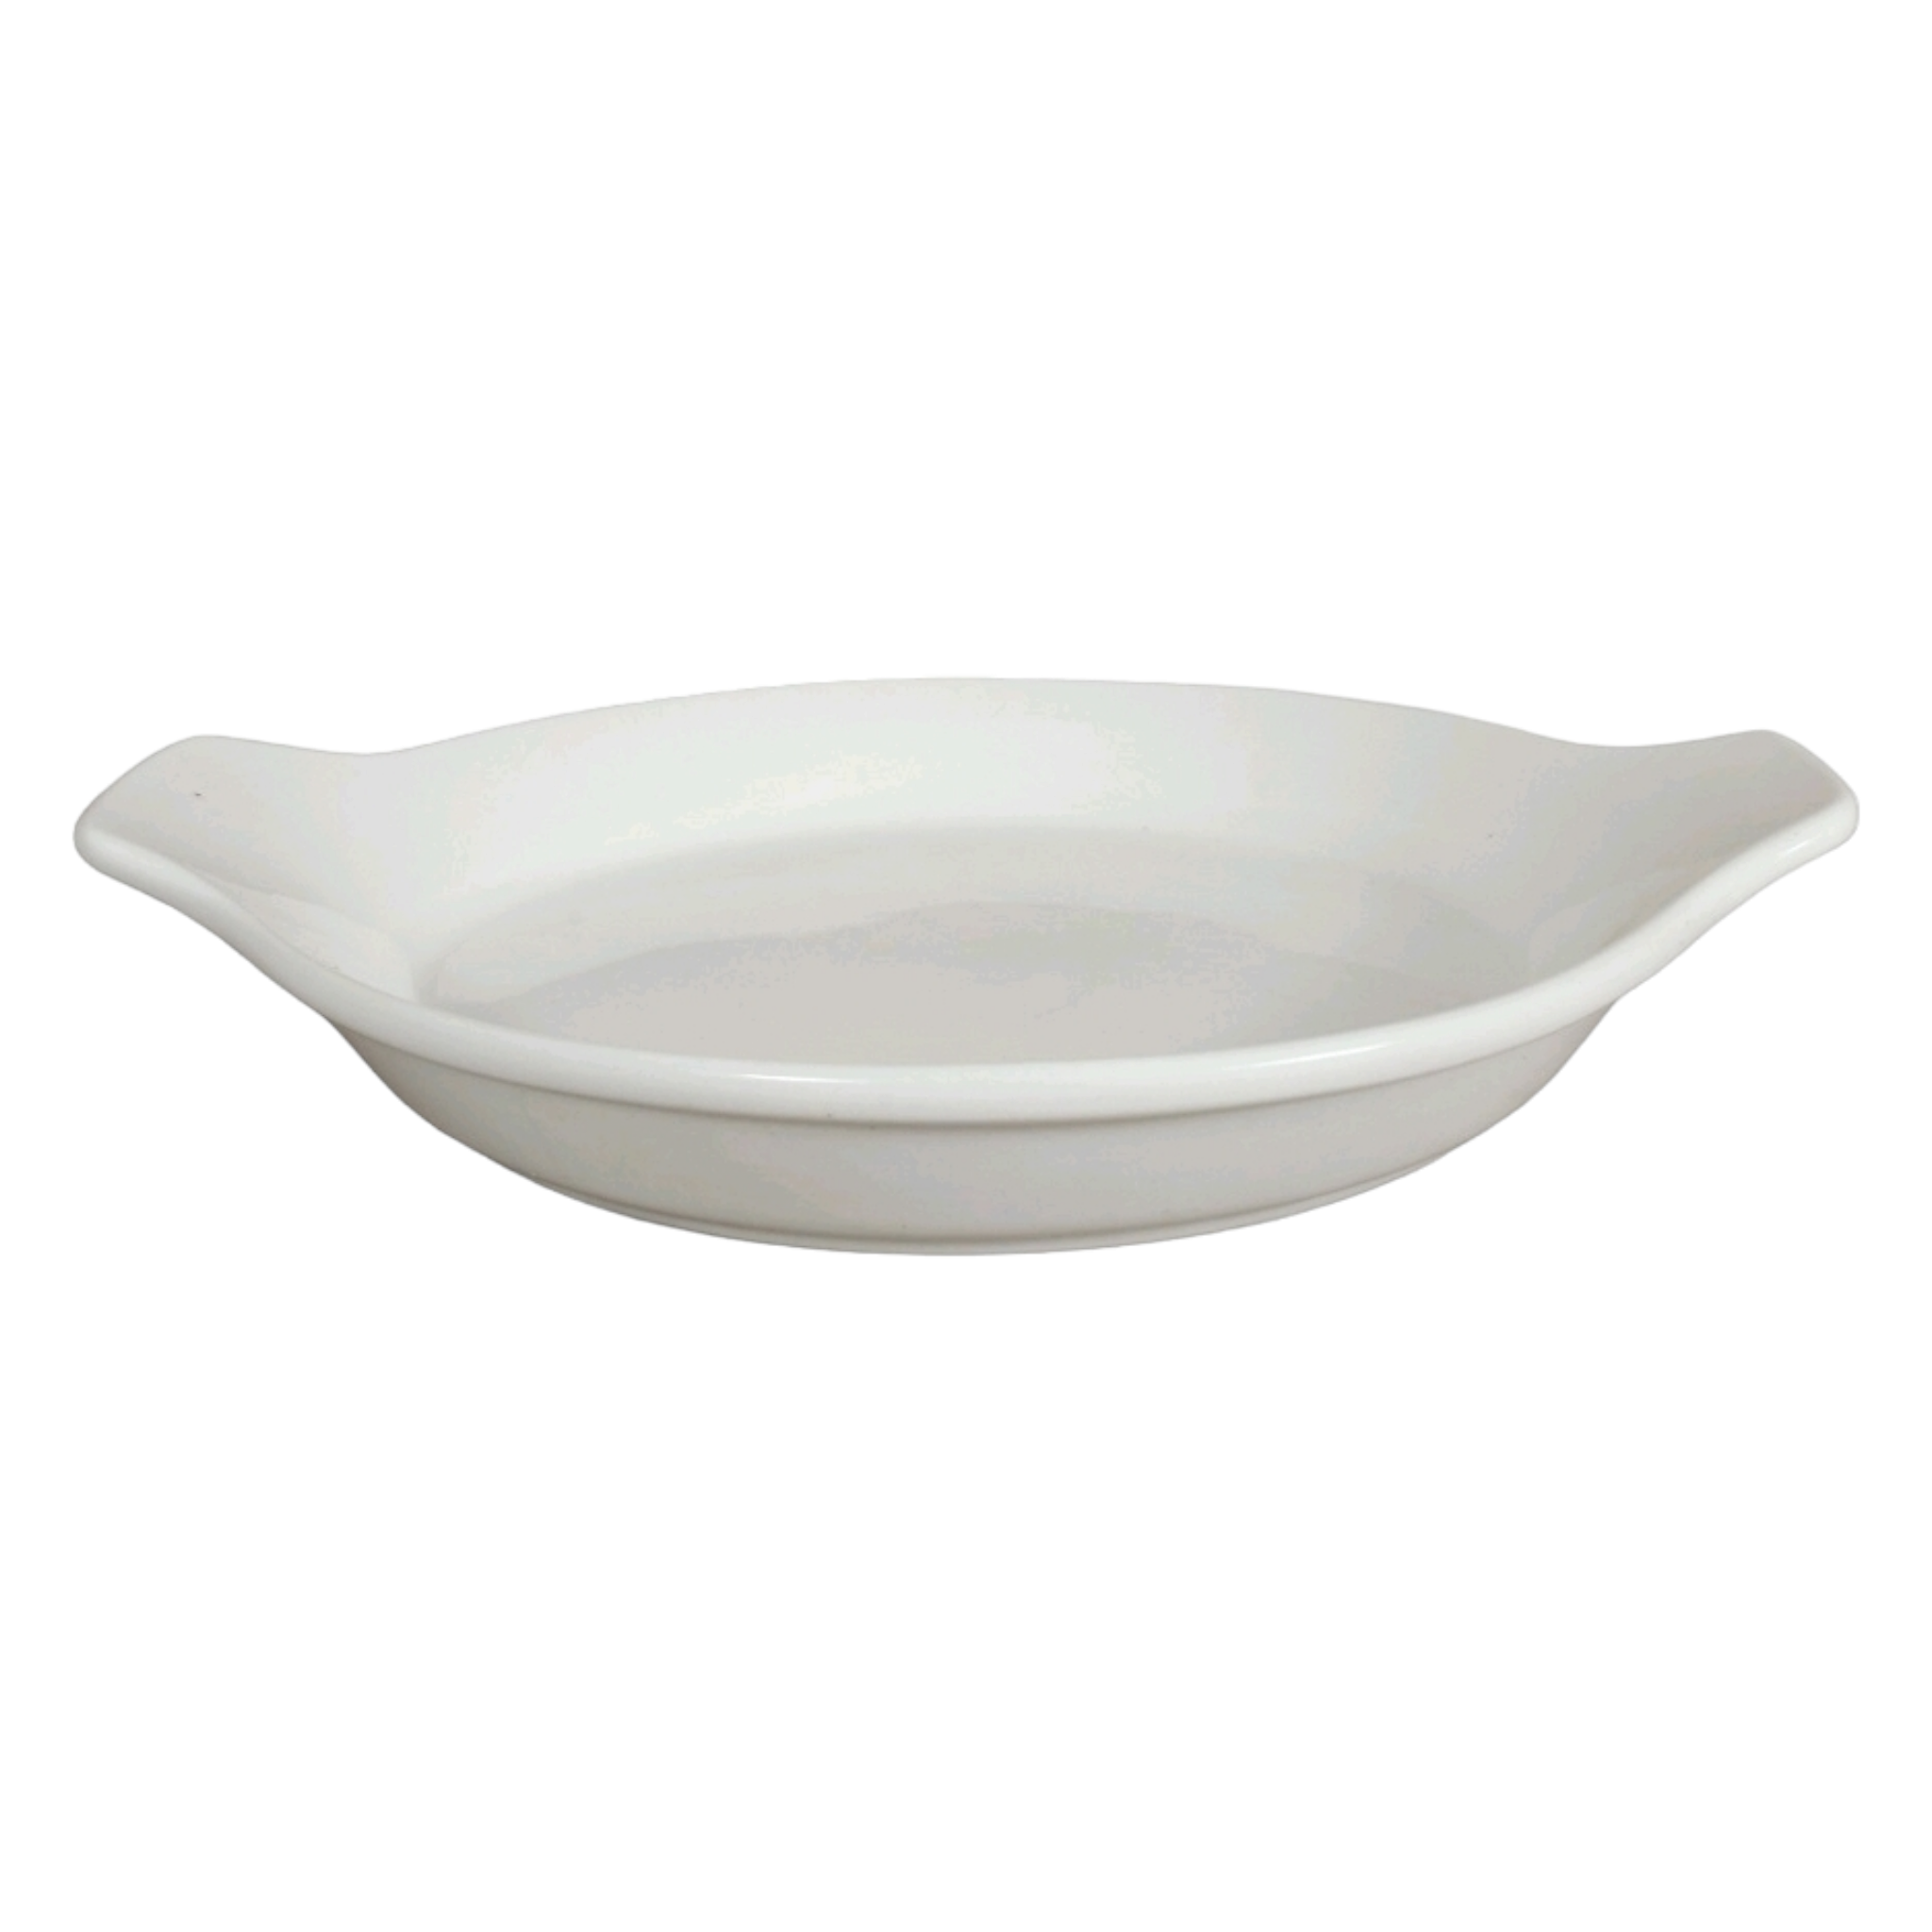 Ceramic Round Eared Dish Plate 11.25inch 34853